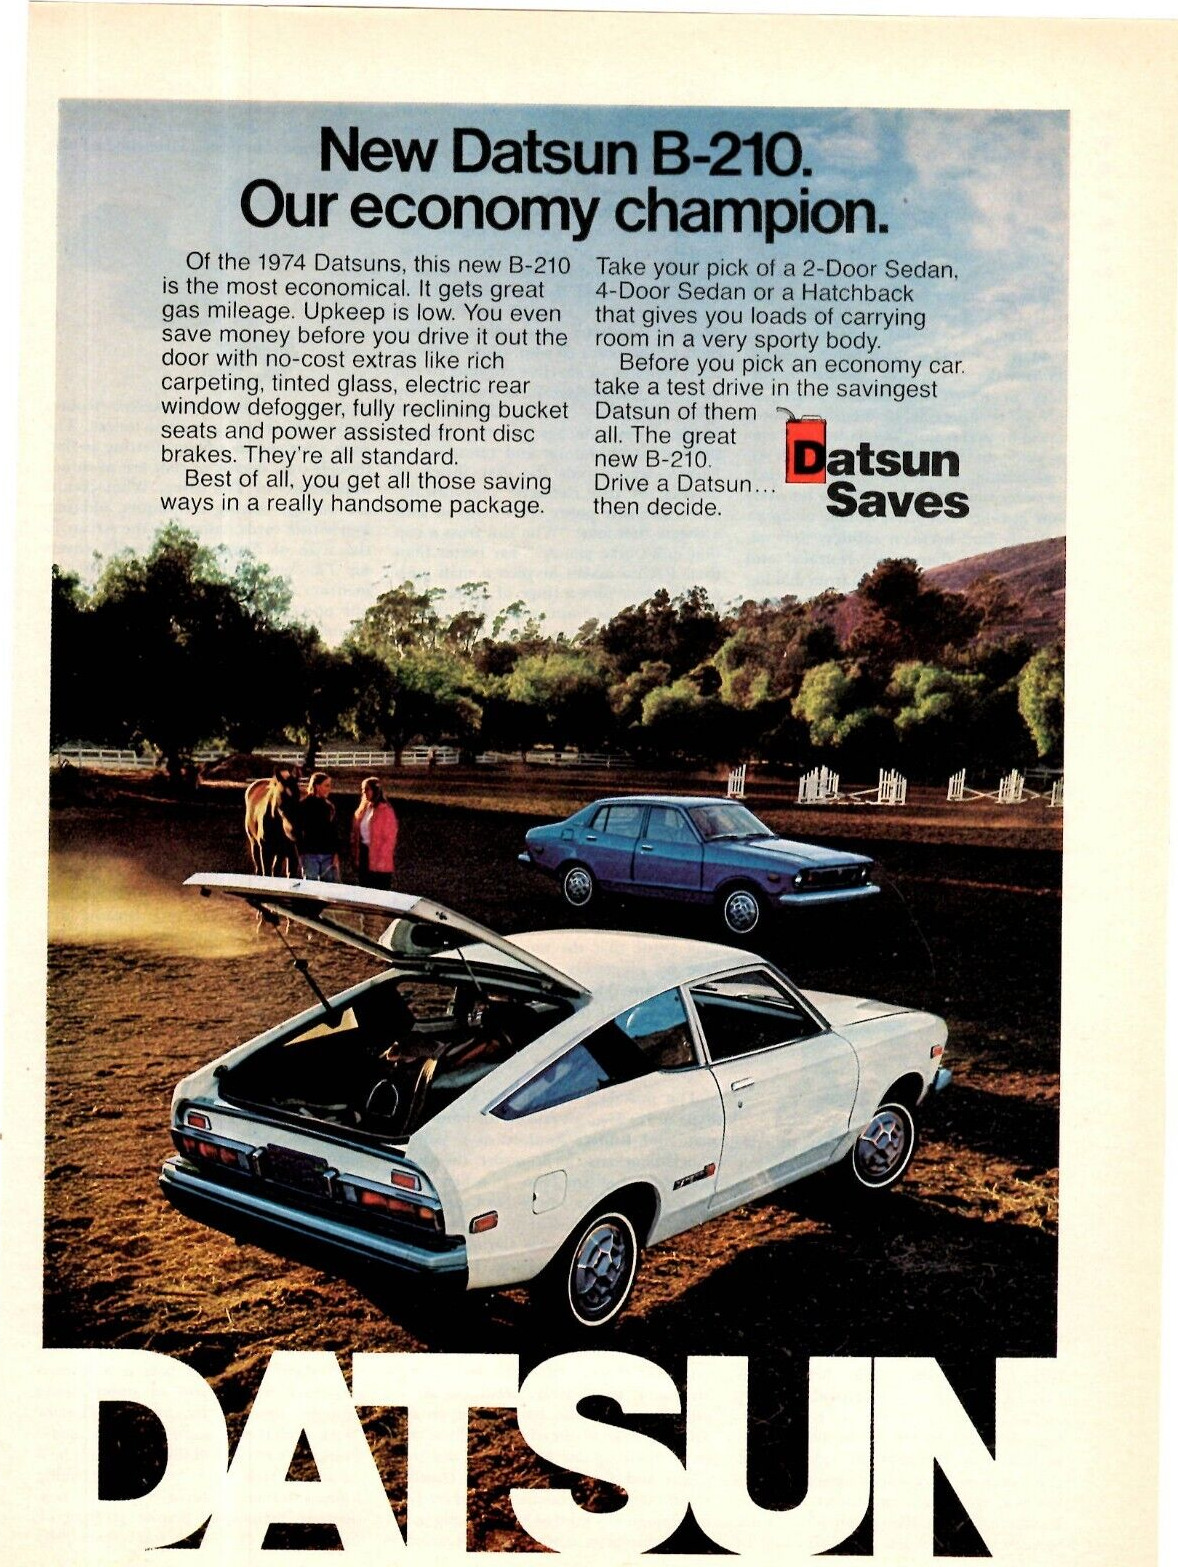 1974 Print Ad Datsun B-210 Our economy champion electric rear window defogger